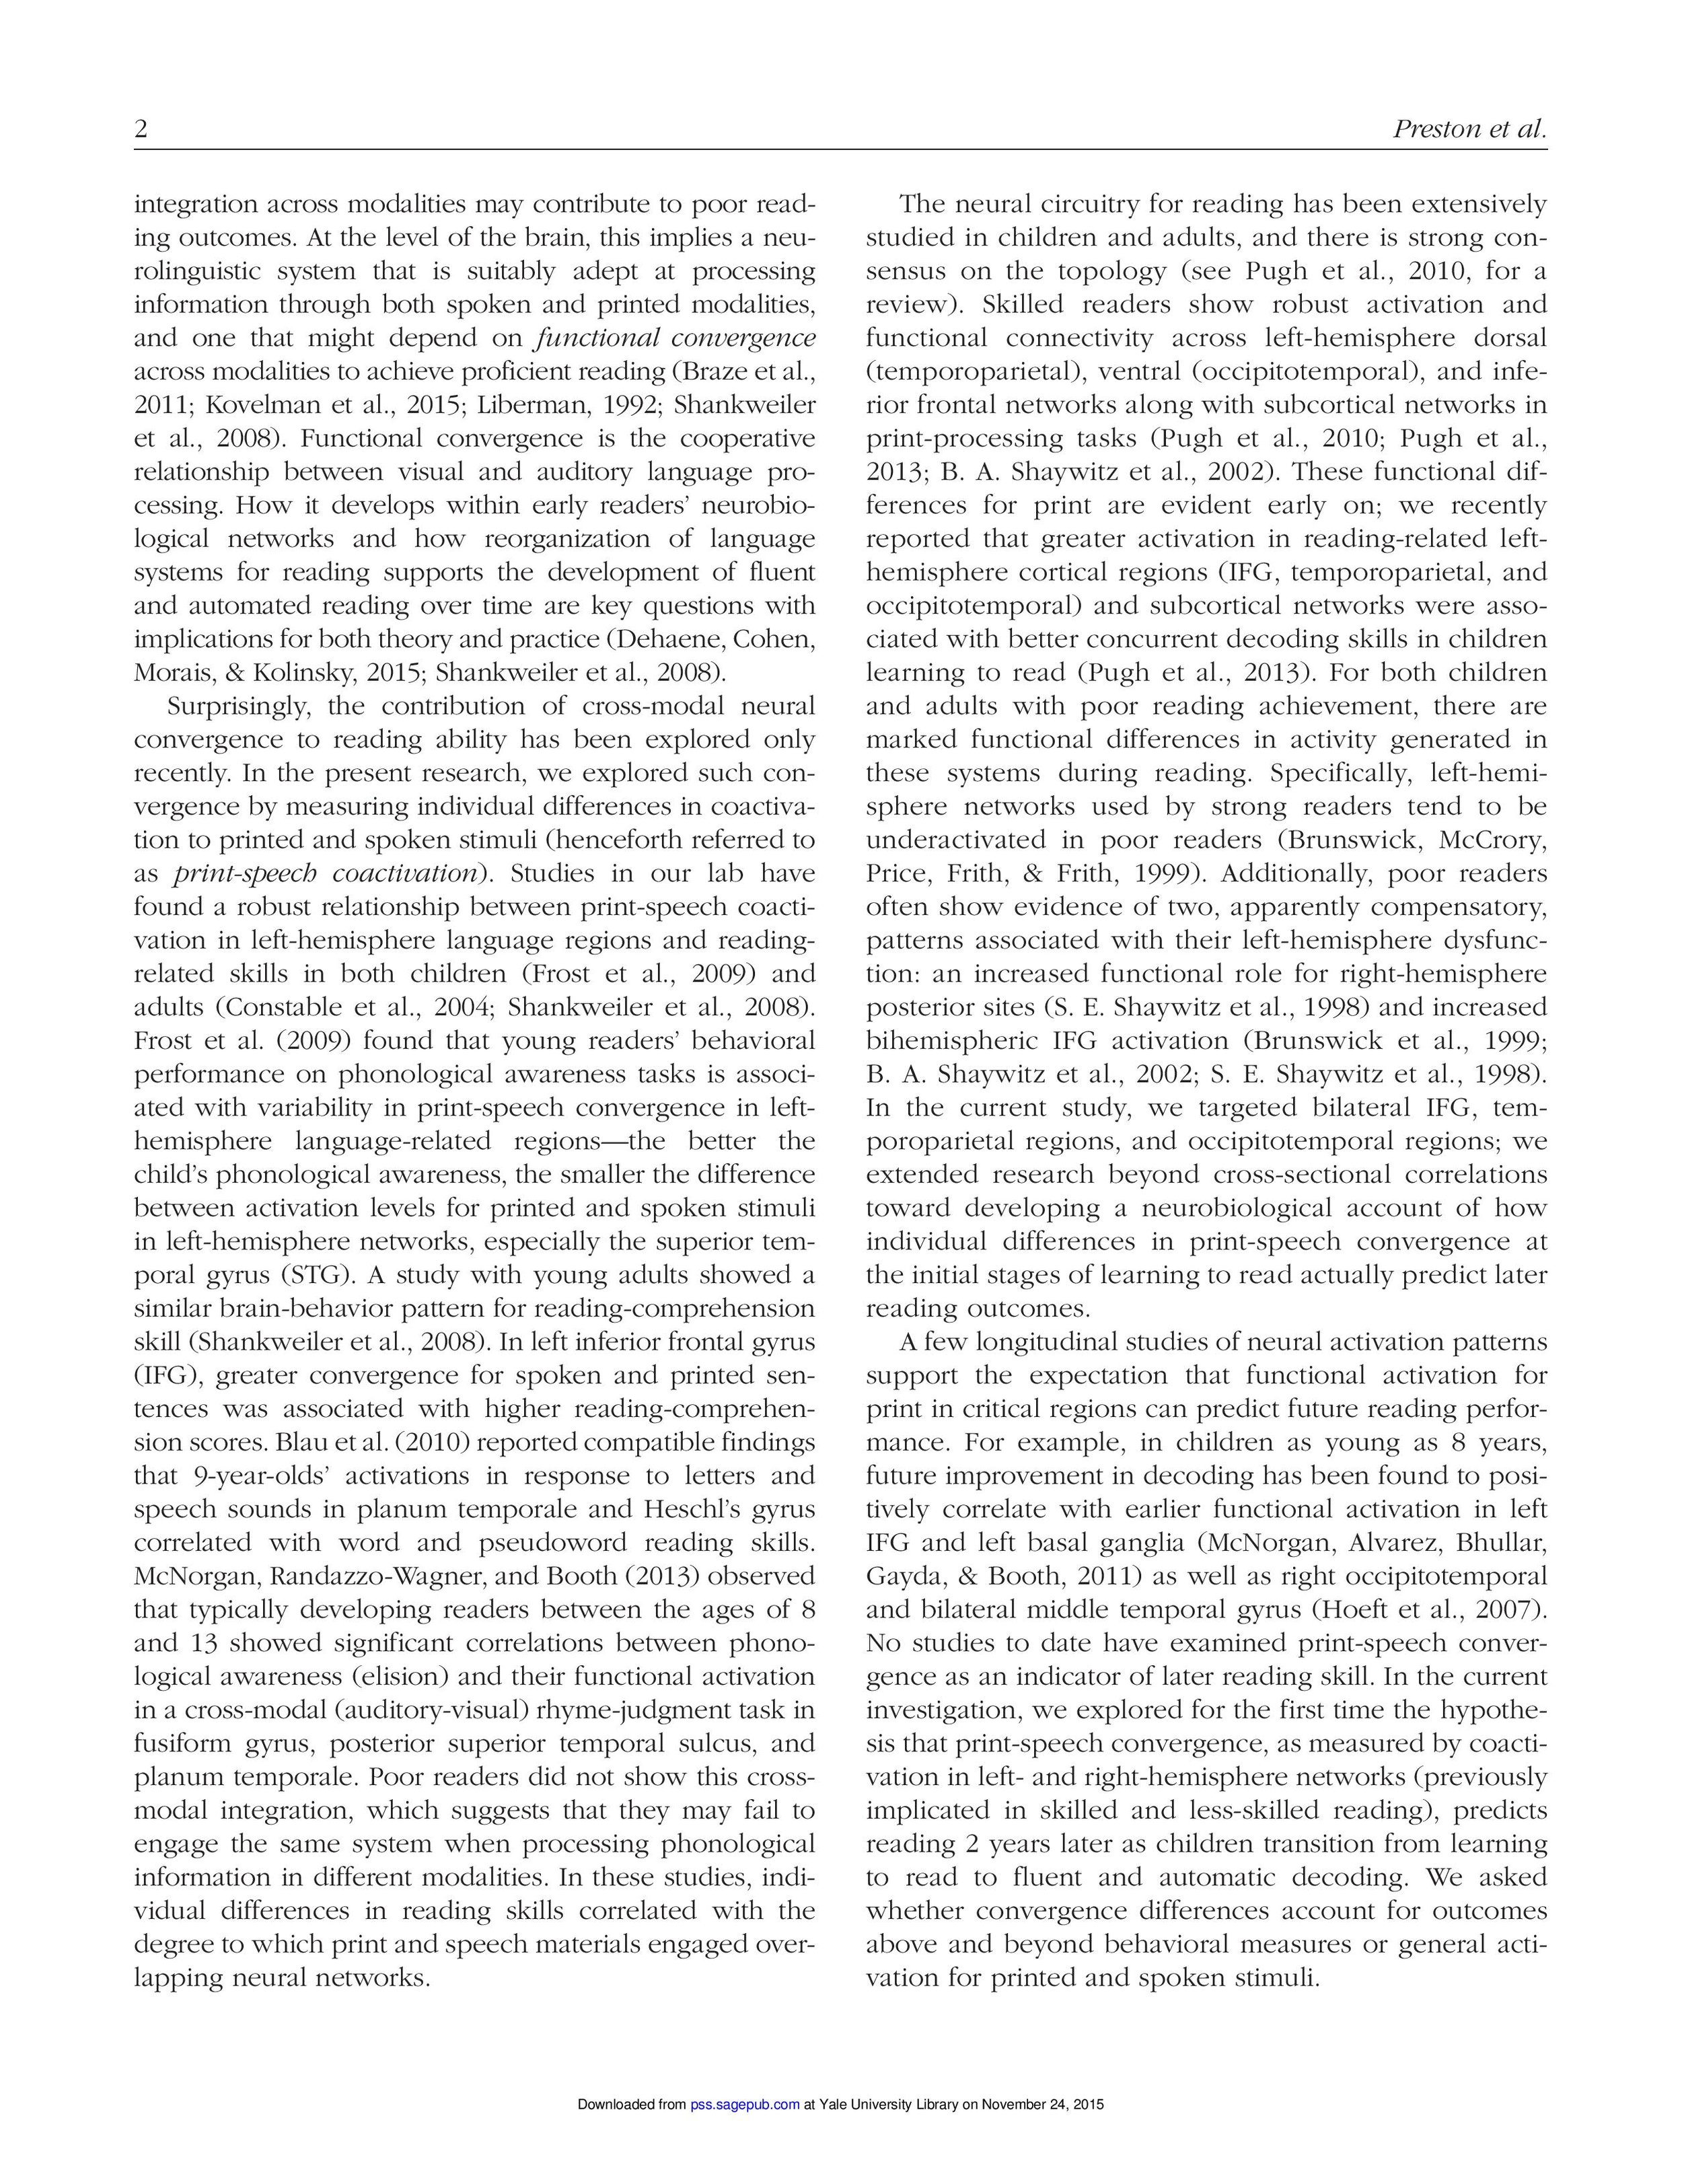 Psychological Science-2015-Preston-0956797615611921 (1)-page-002.jpg